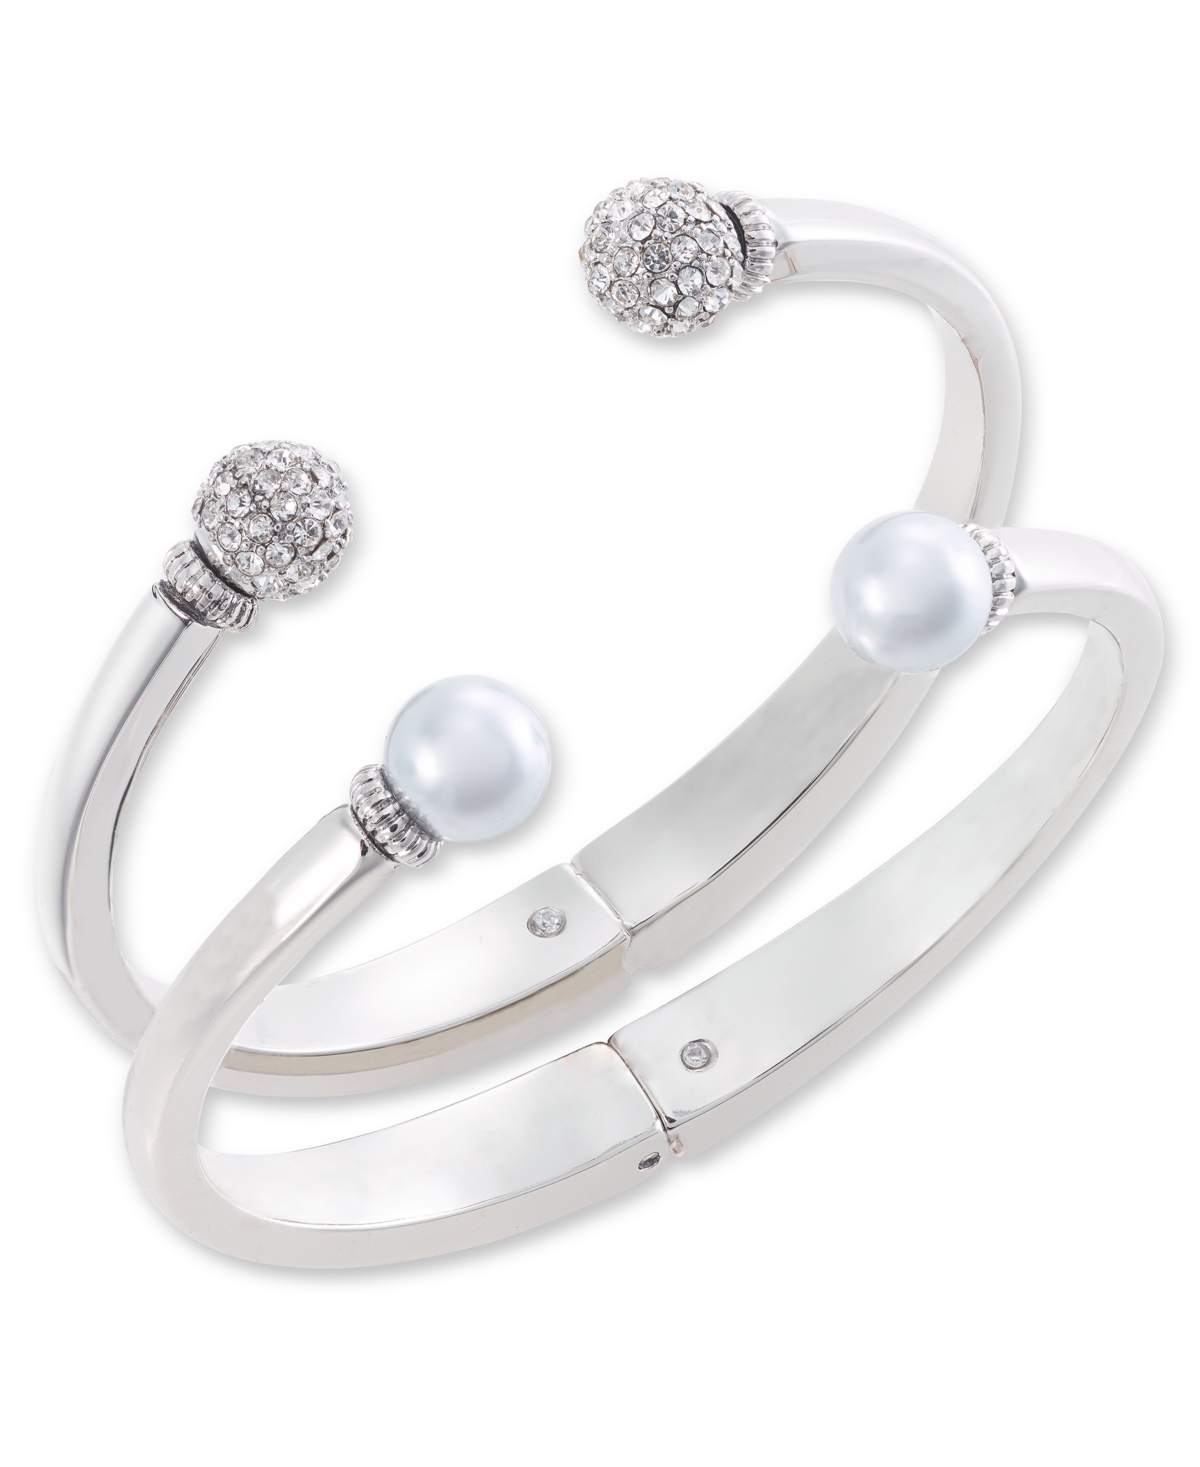 2-Pc. Set Pave Fireball & Pink Imitation Pearl Cuff Bracelets, Created for Macy's - Multi